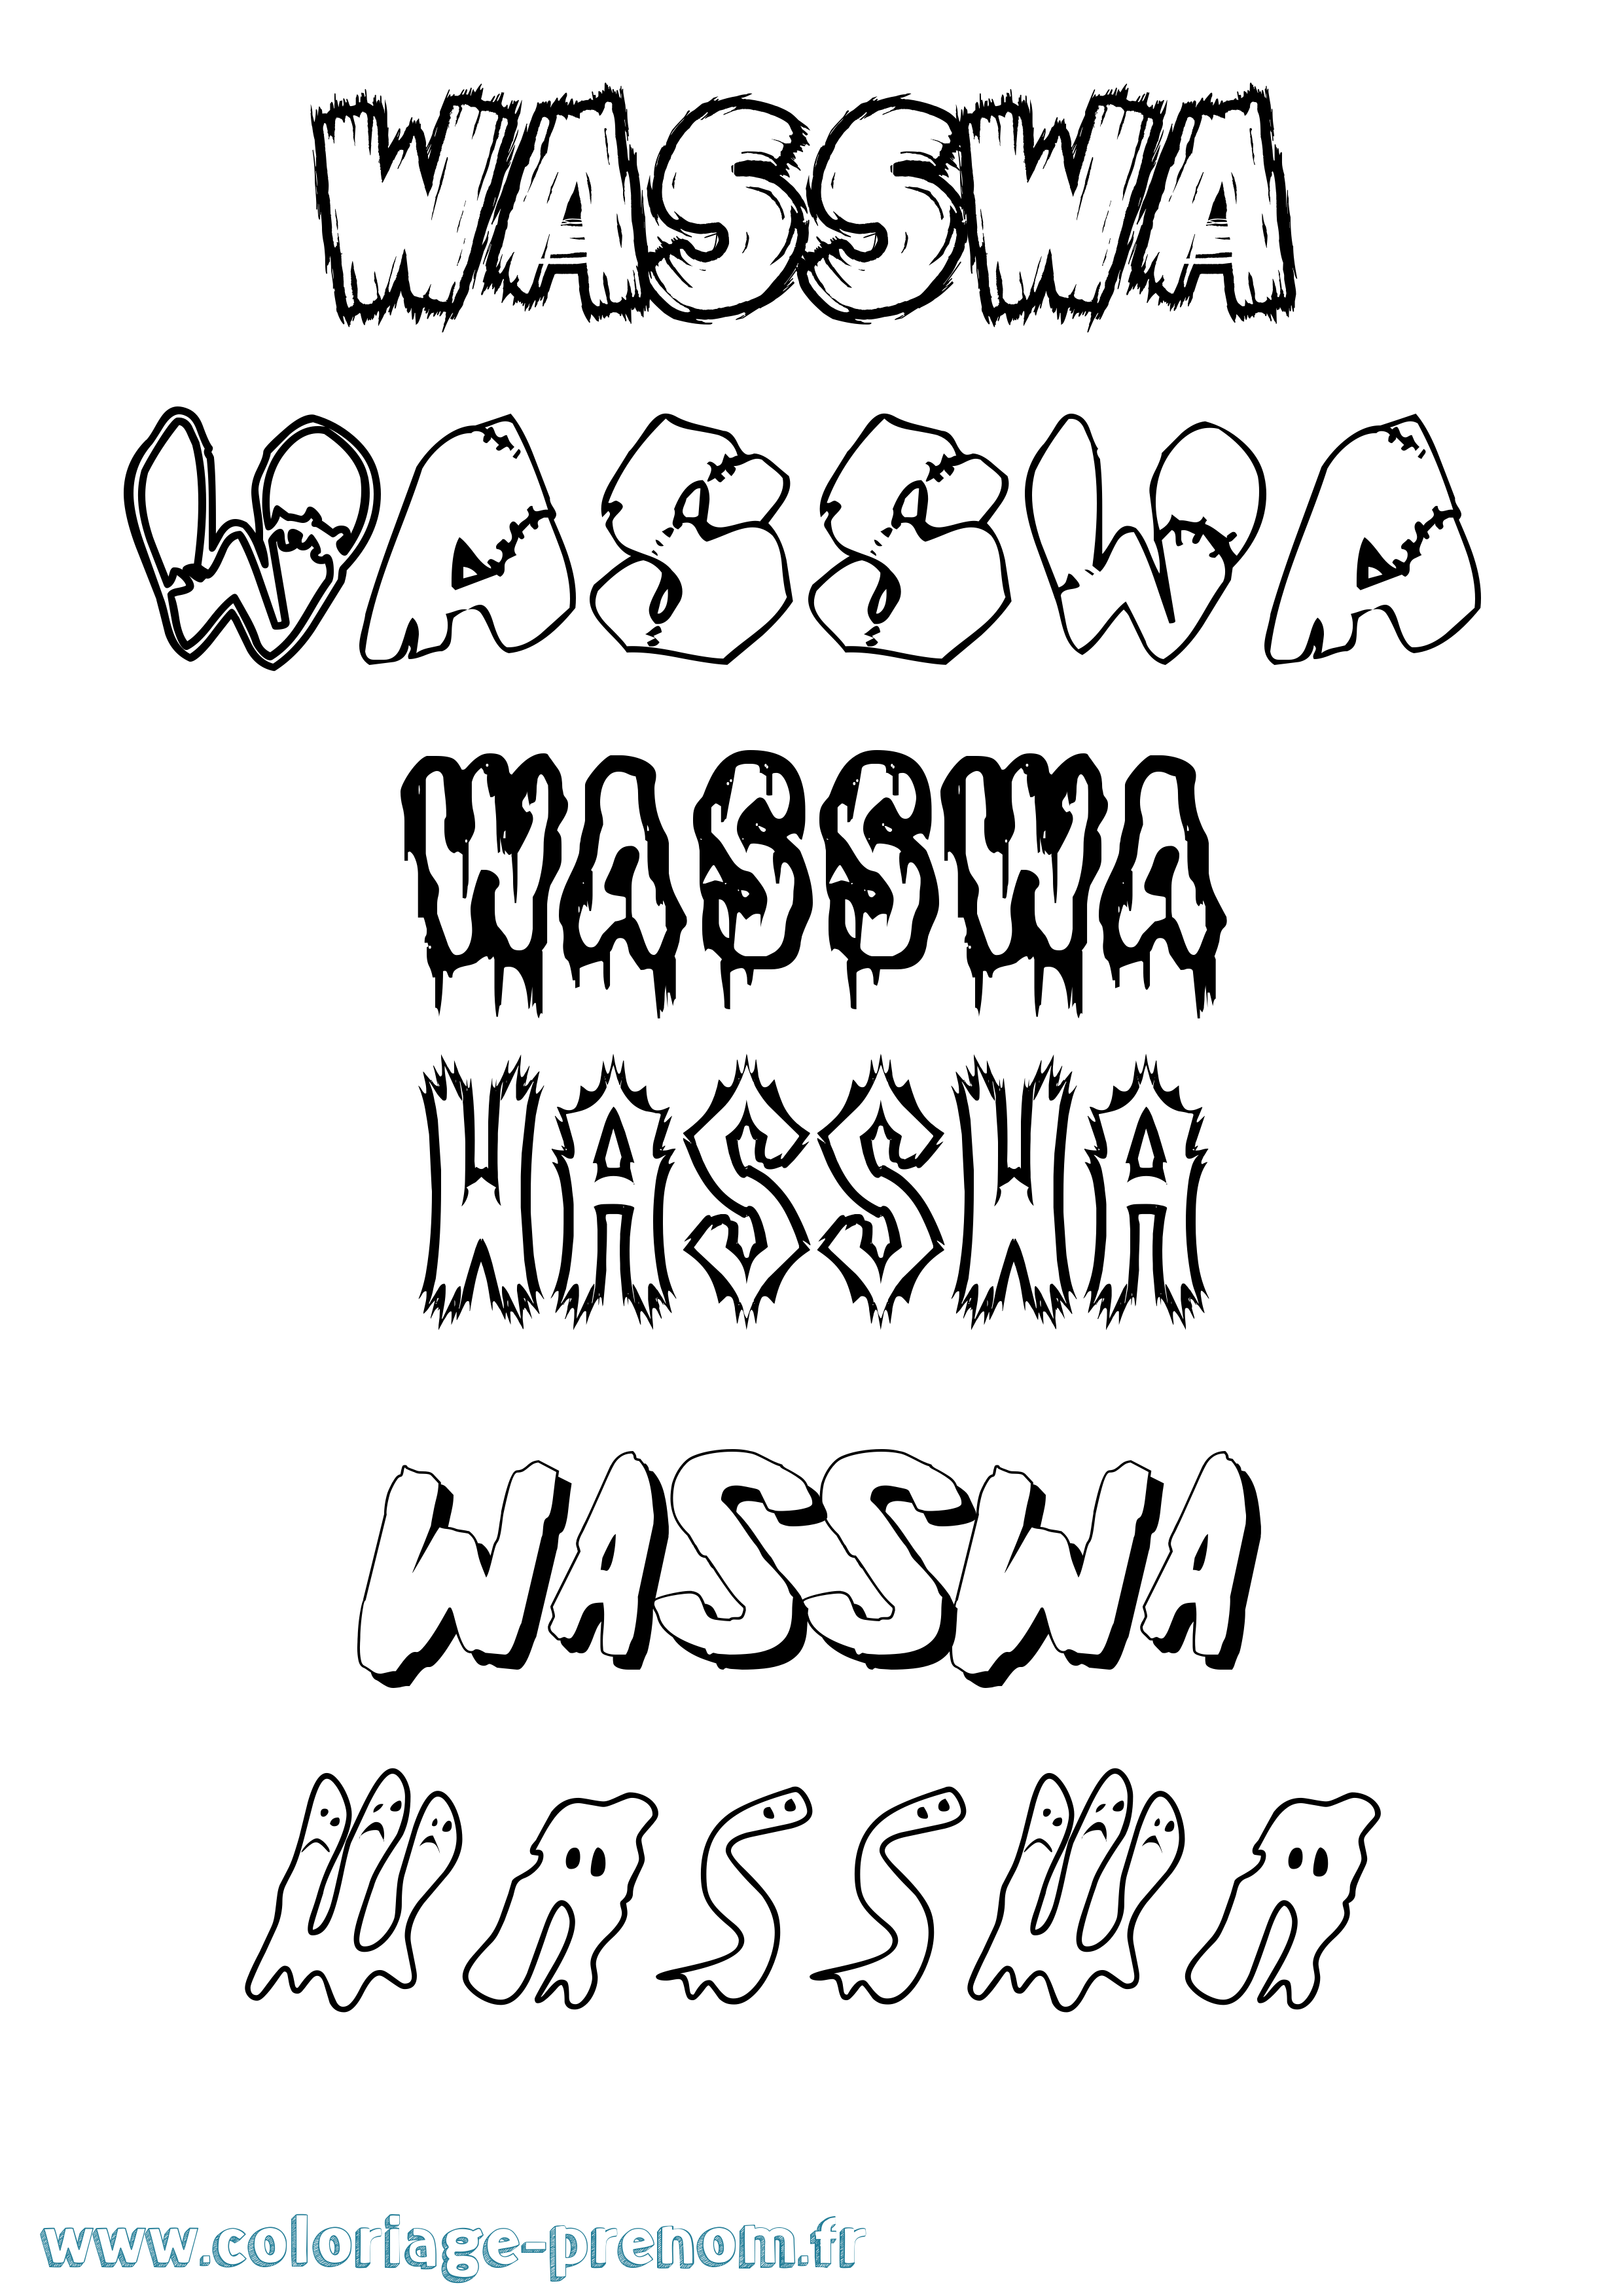 Coloriage prénom Wasswa Frisson